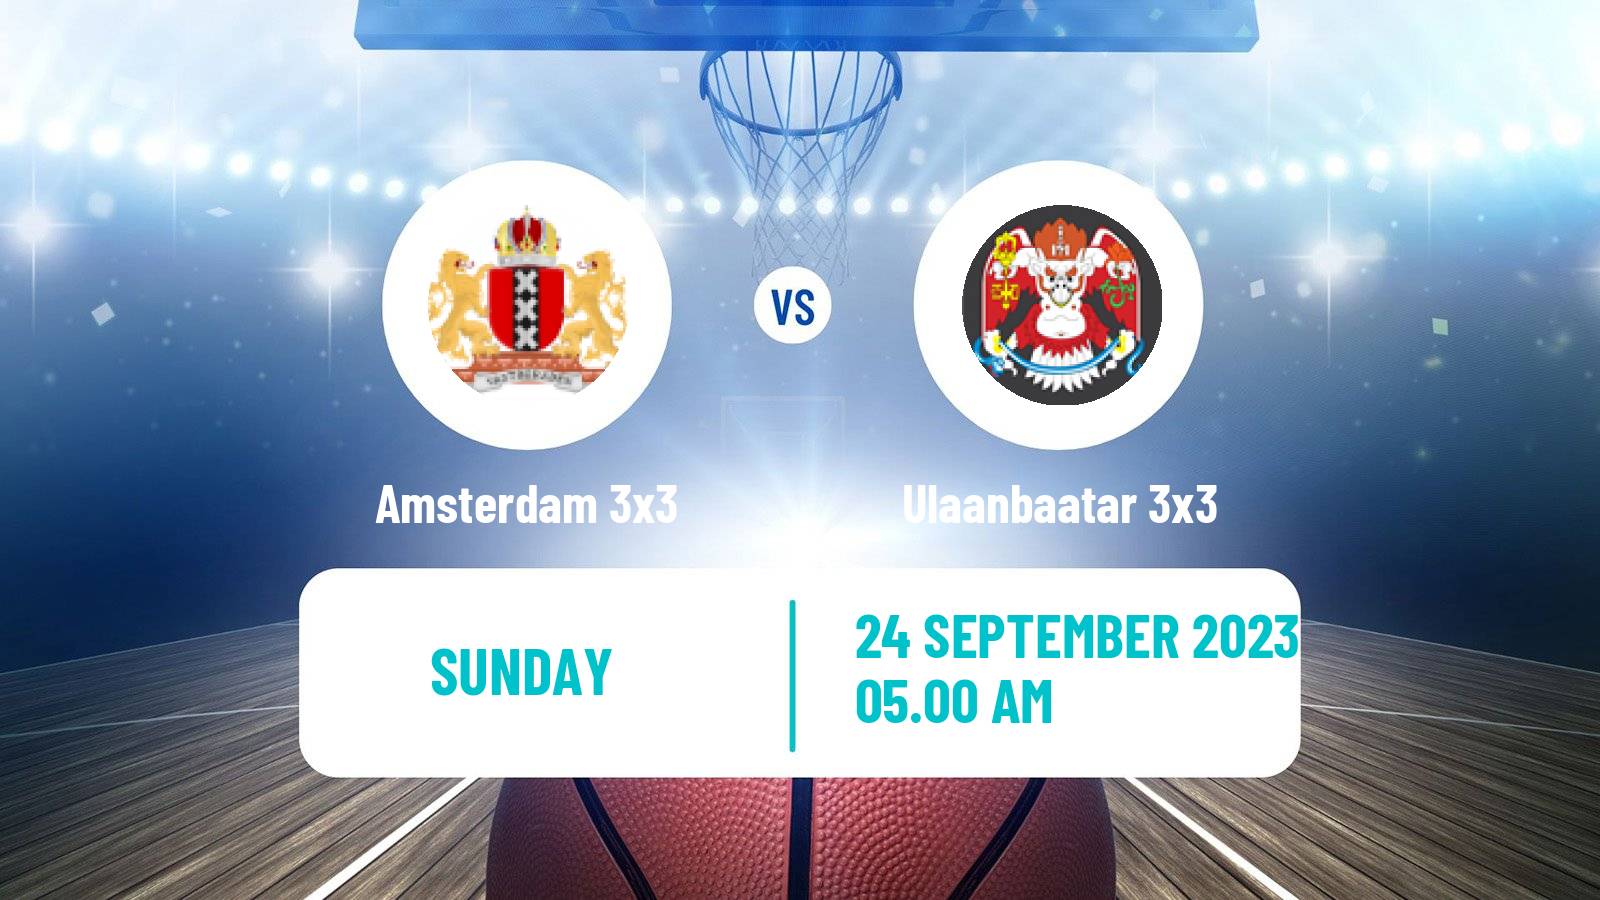 Basketball World Tour Сebu 3x3 Amsterdam 3x3 - Ulaanbaatar 3x3